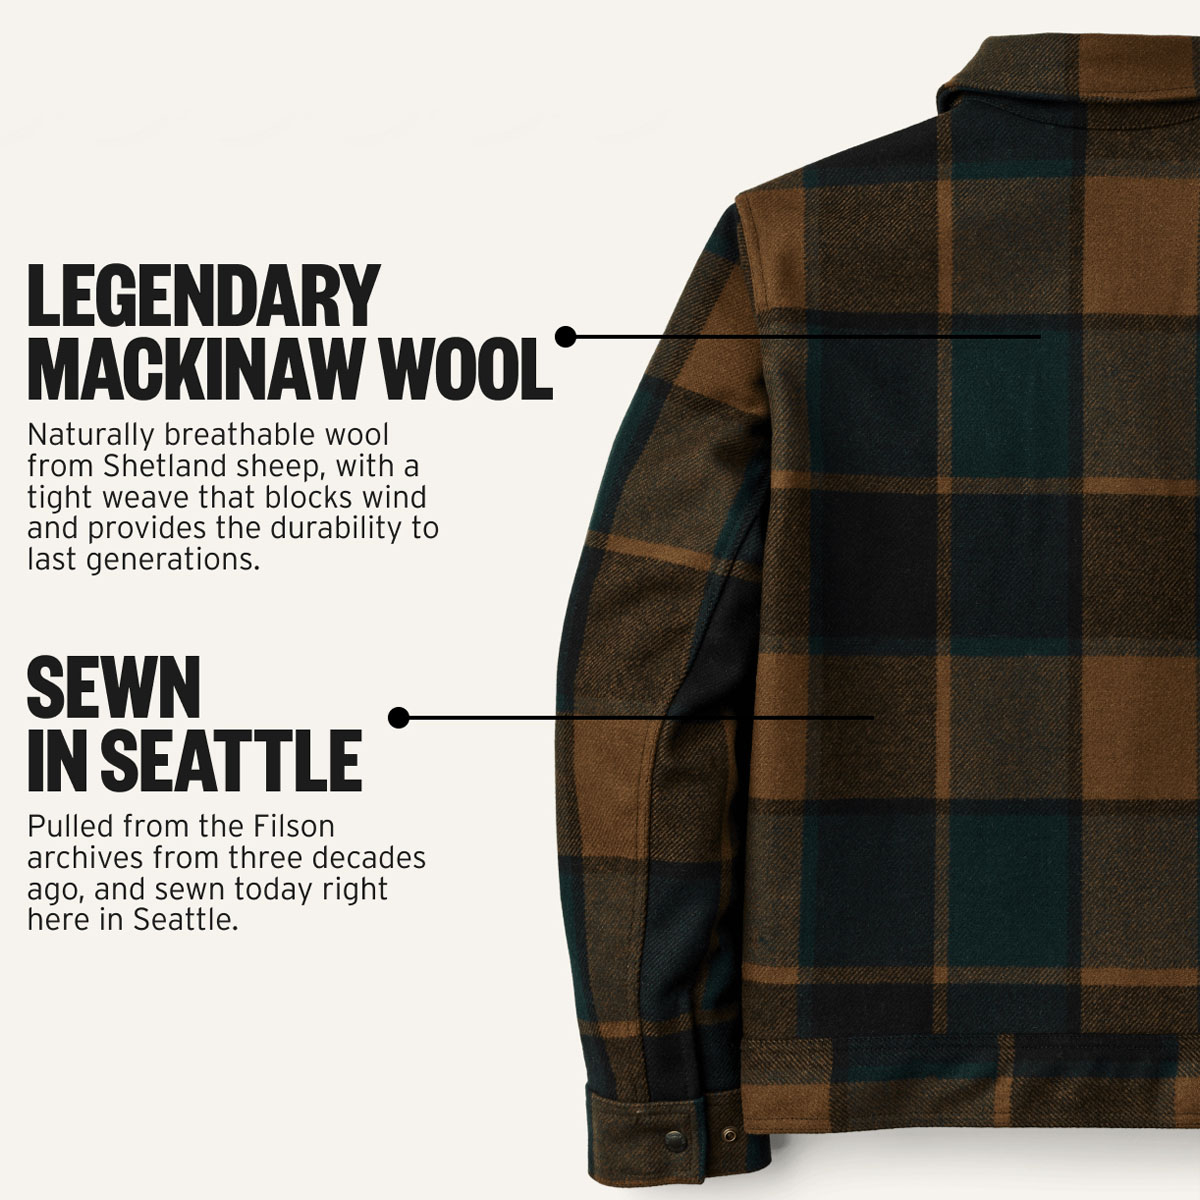 Filson Mackinaw Wool Work Jacket Pine Black Plaid, Legendary Mackinaw Wool and Sewn in Seattle